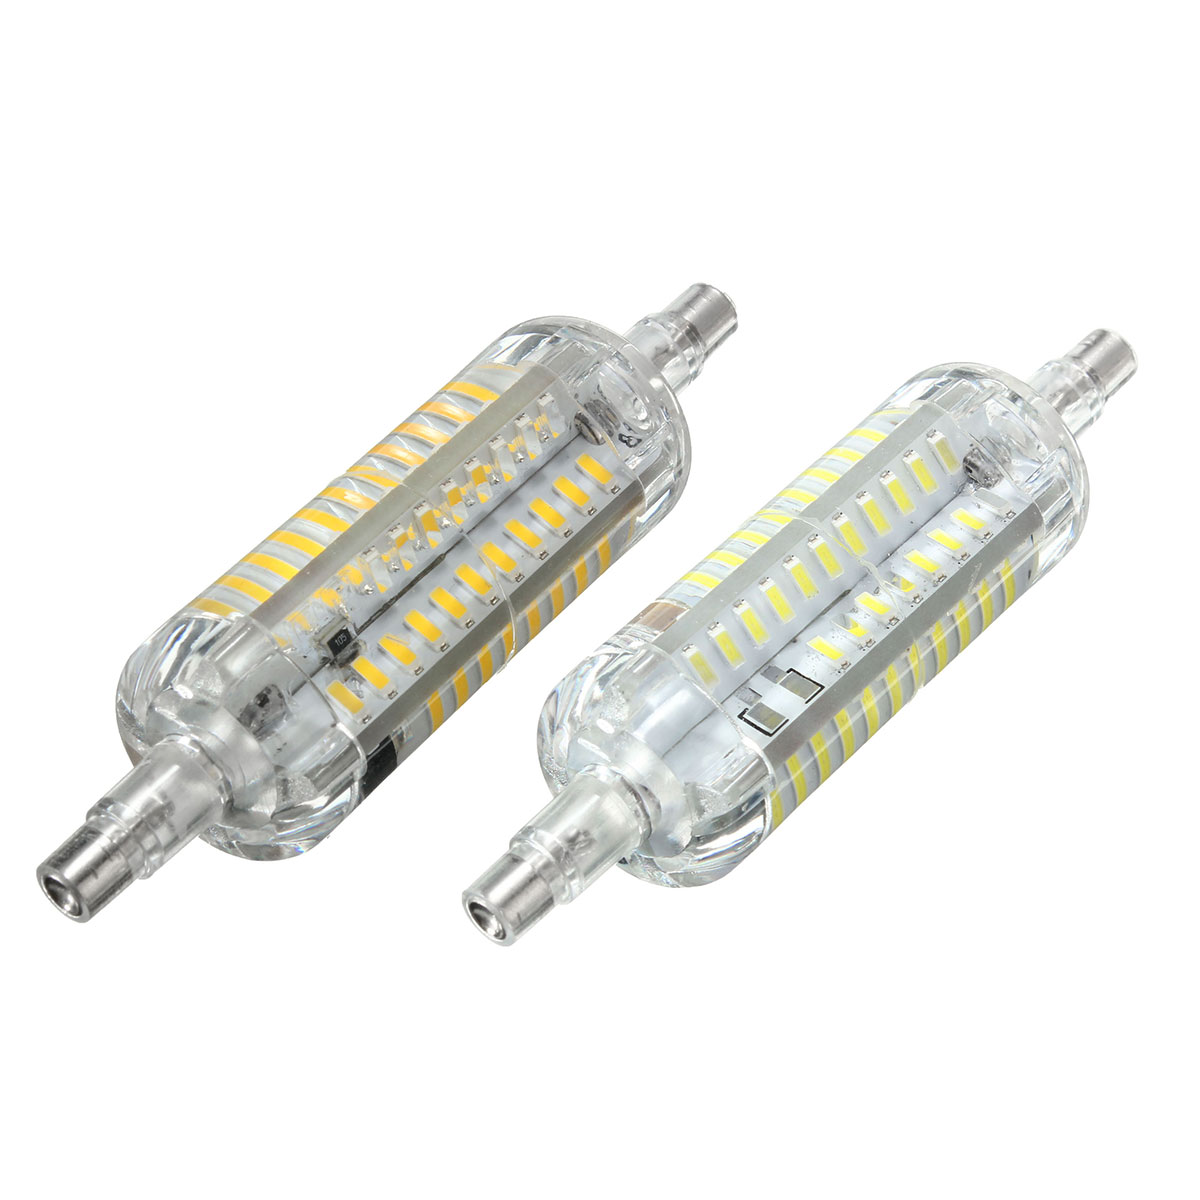 R7S-78mm-5W-76-SMD-4014-LED-Pure-White-Warm-White-Light-Lamp-Bulb-AC220V-1066219-6